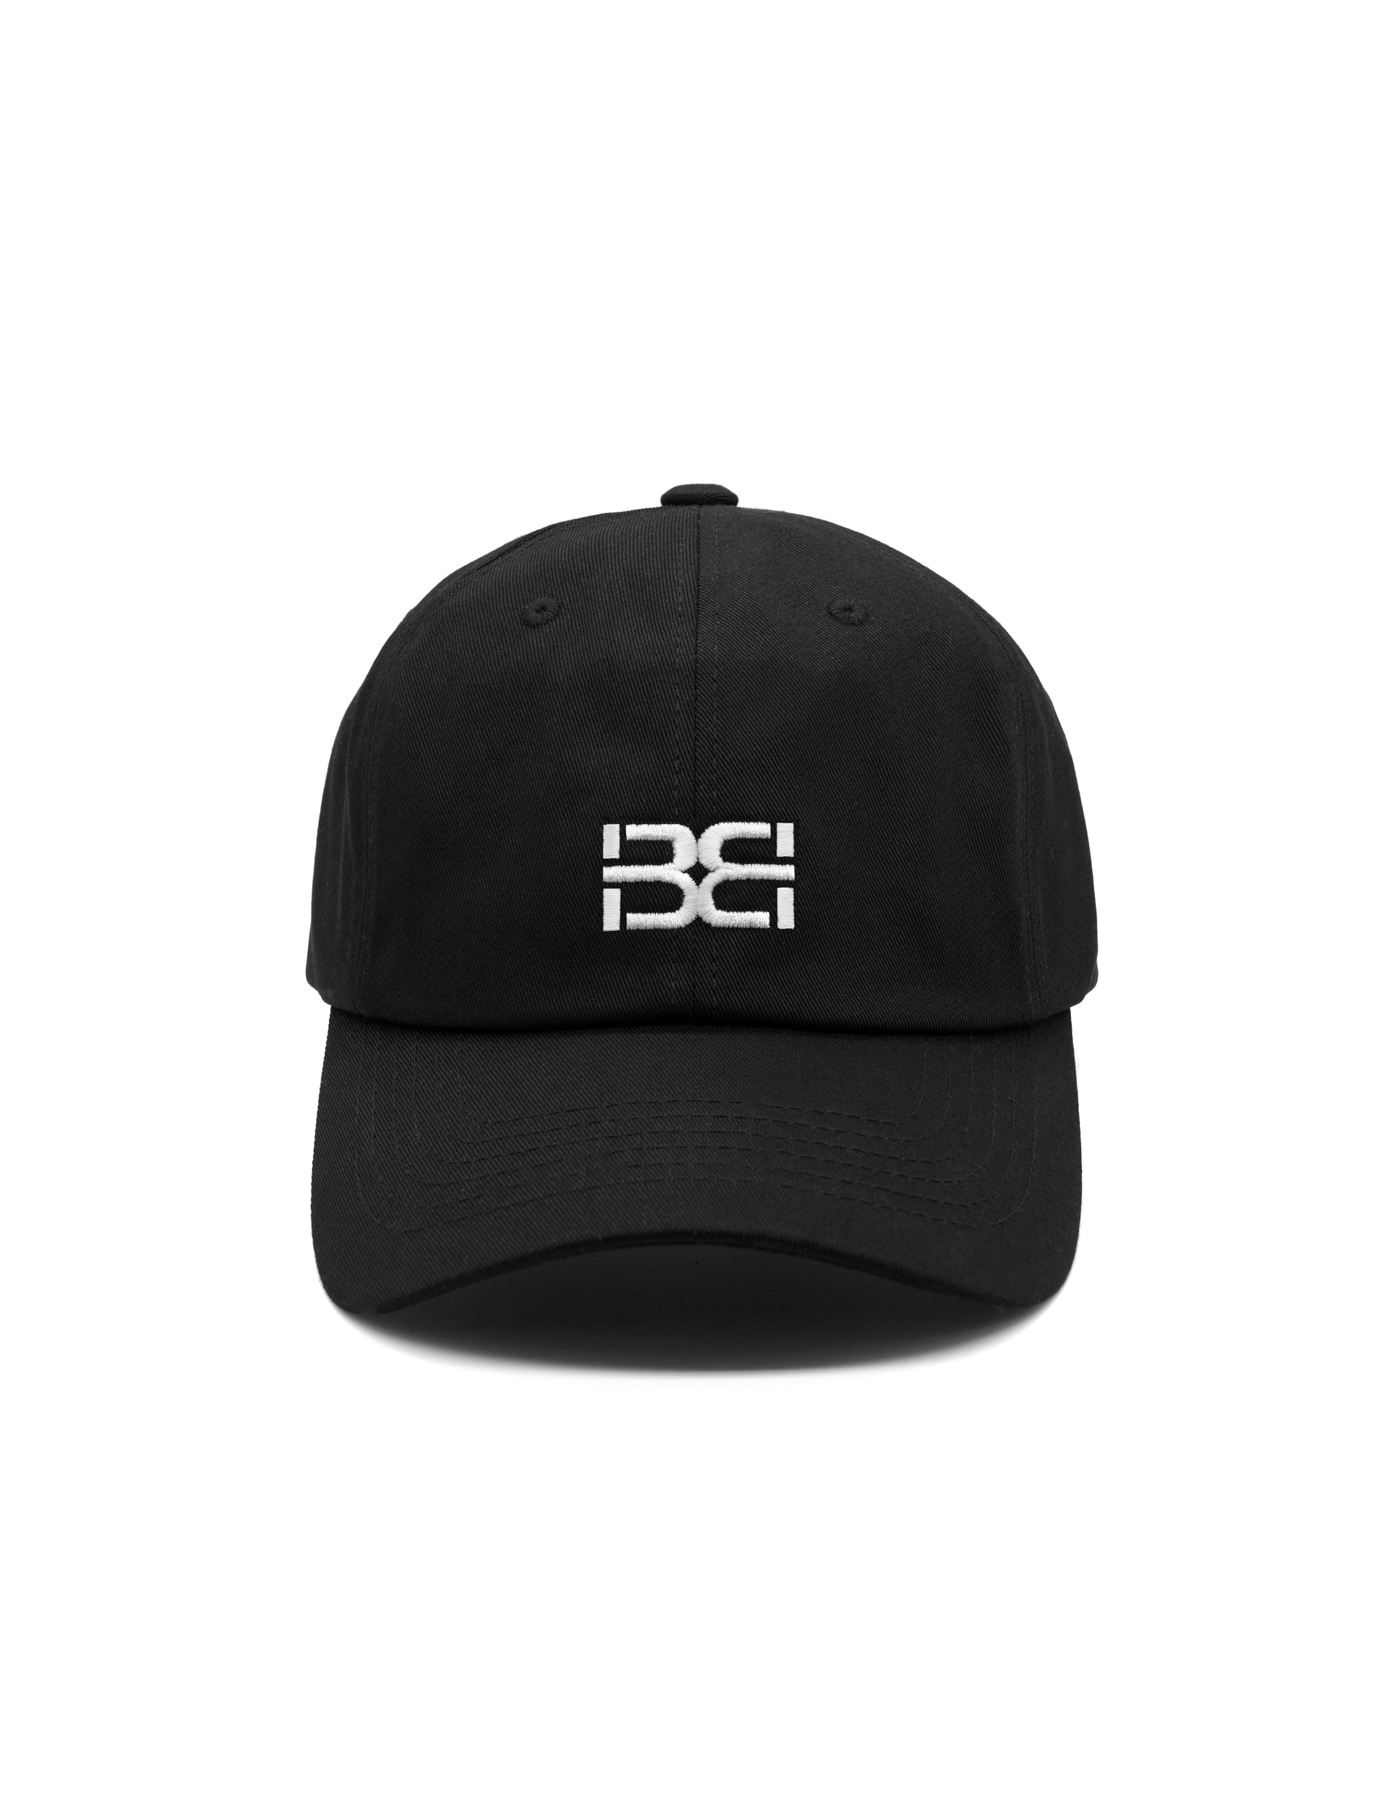 BB LOGO CAP (BLACK)